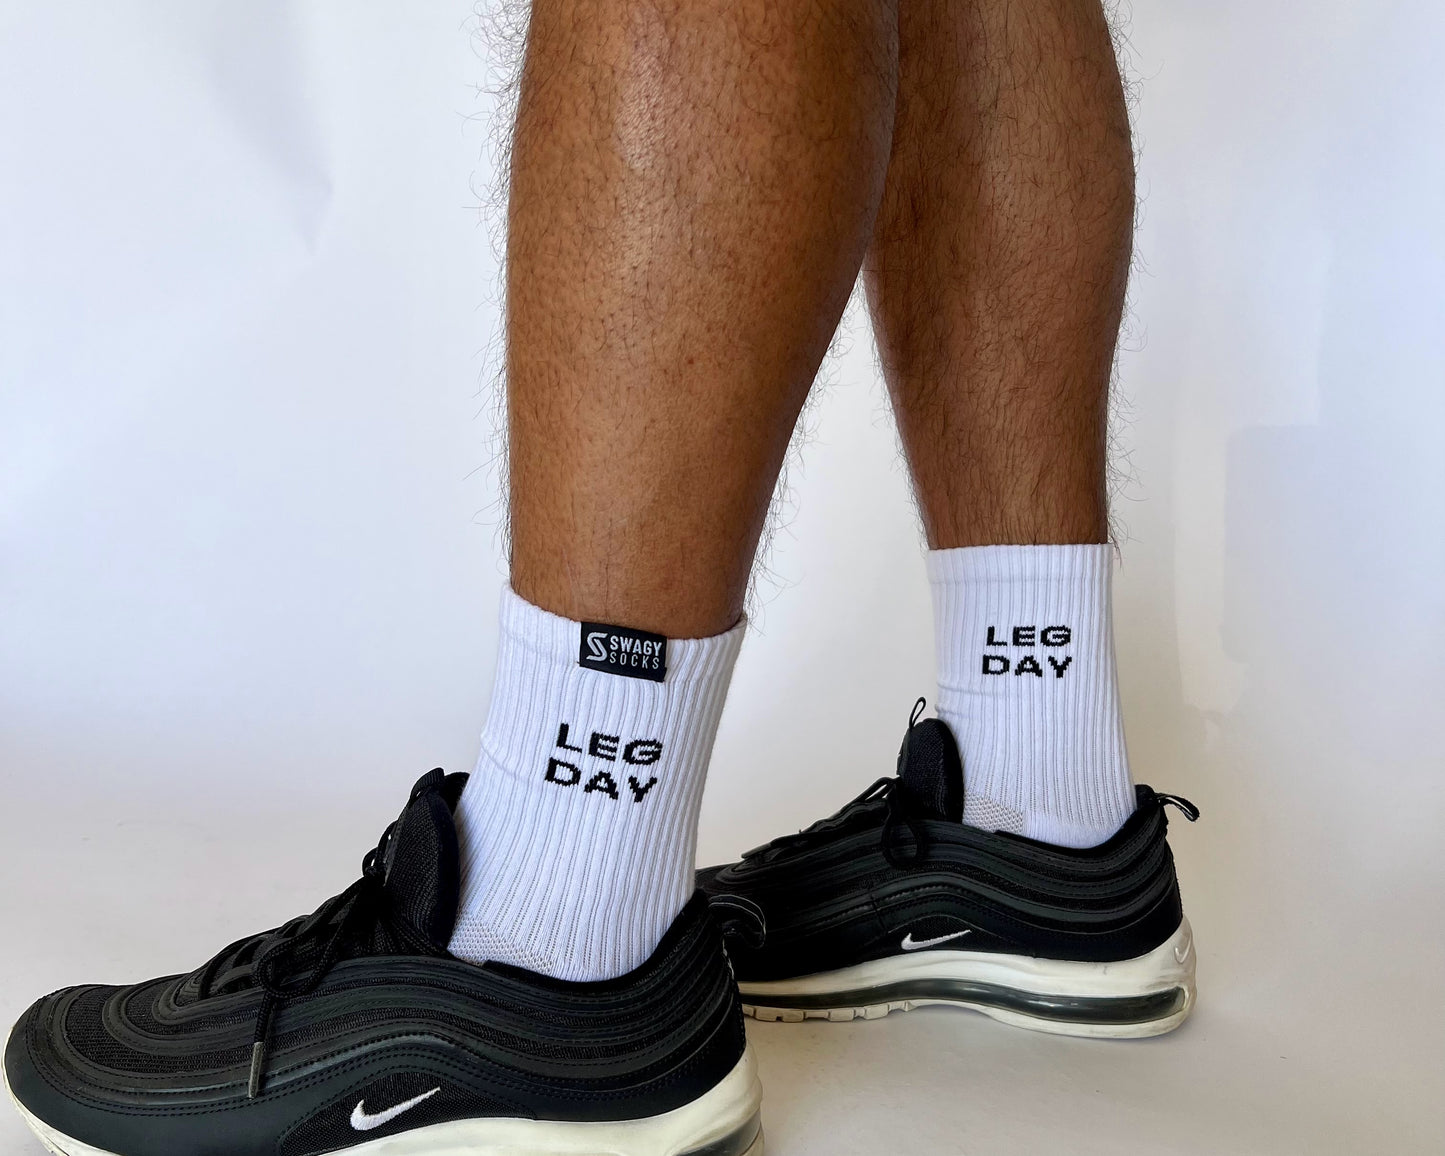 Leg Day - Unisex Crew Workout Socks